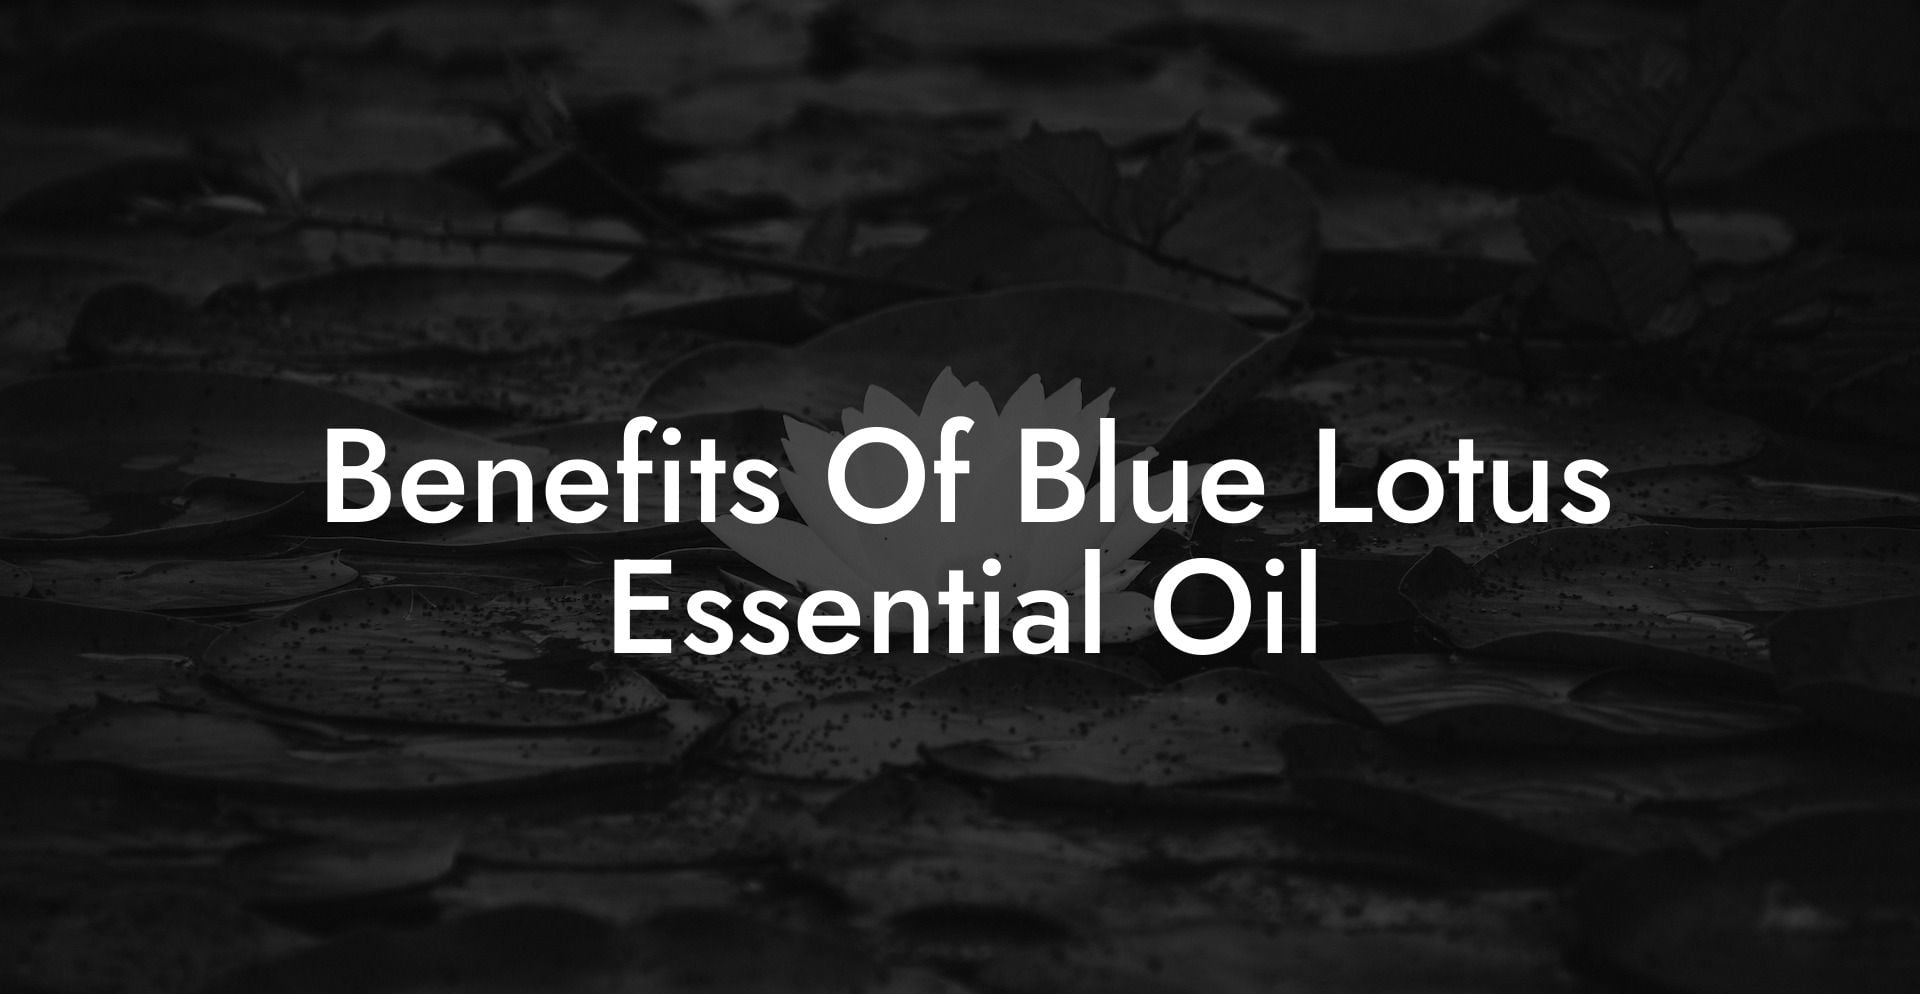 Benefits Of Blue Lotus Essential Oil